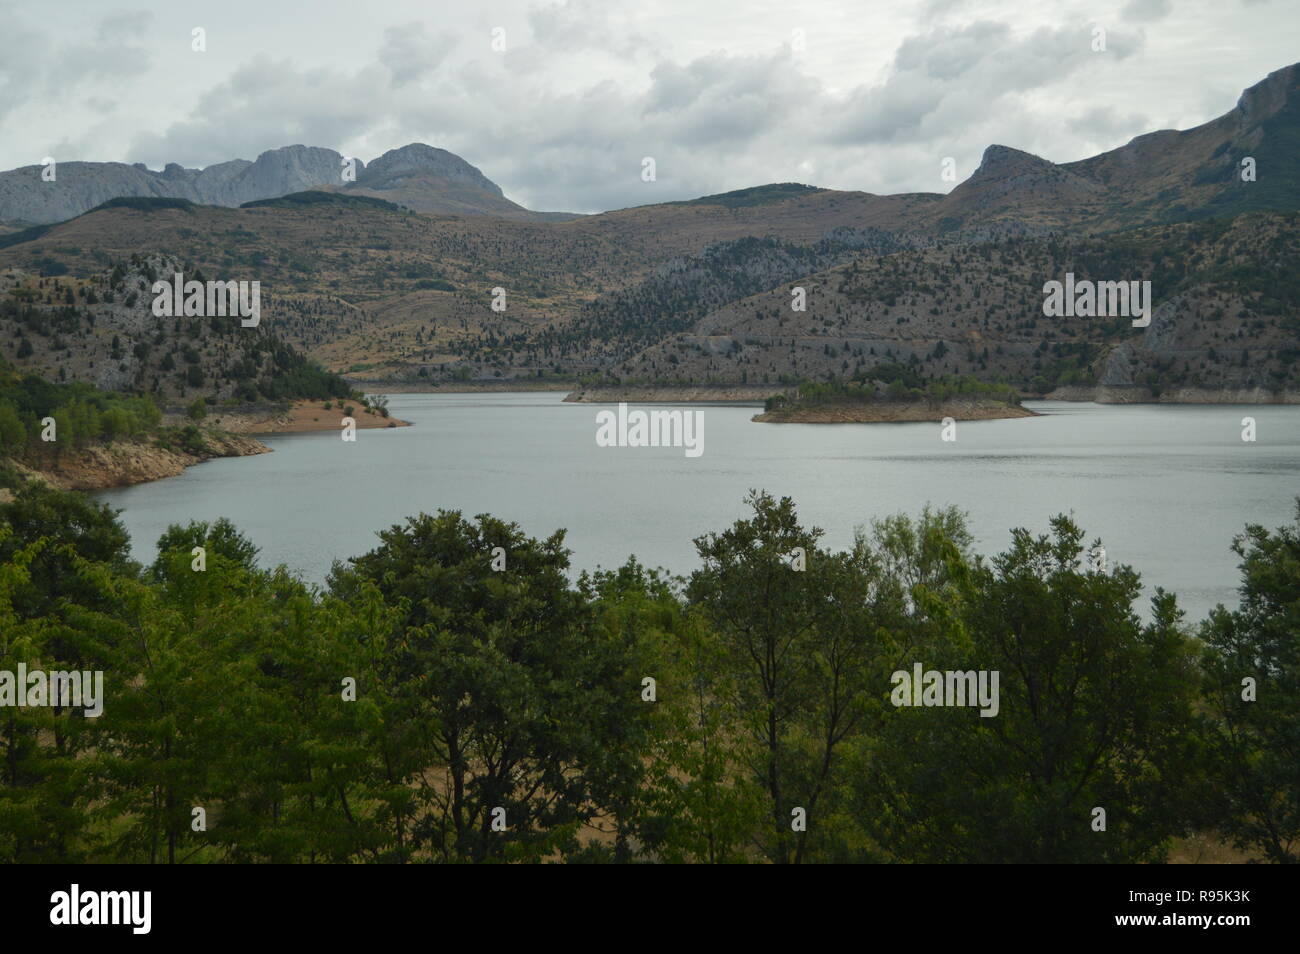 Wonderful Views On A Cloudy Day Of The Barrios De Luna Reservoir. July 29, 2015. Landscapes, Nature, Travel. Barrios De Luna, Leon, Spain. Stock Photo